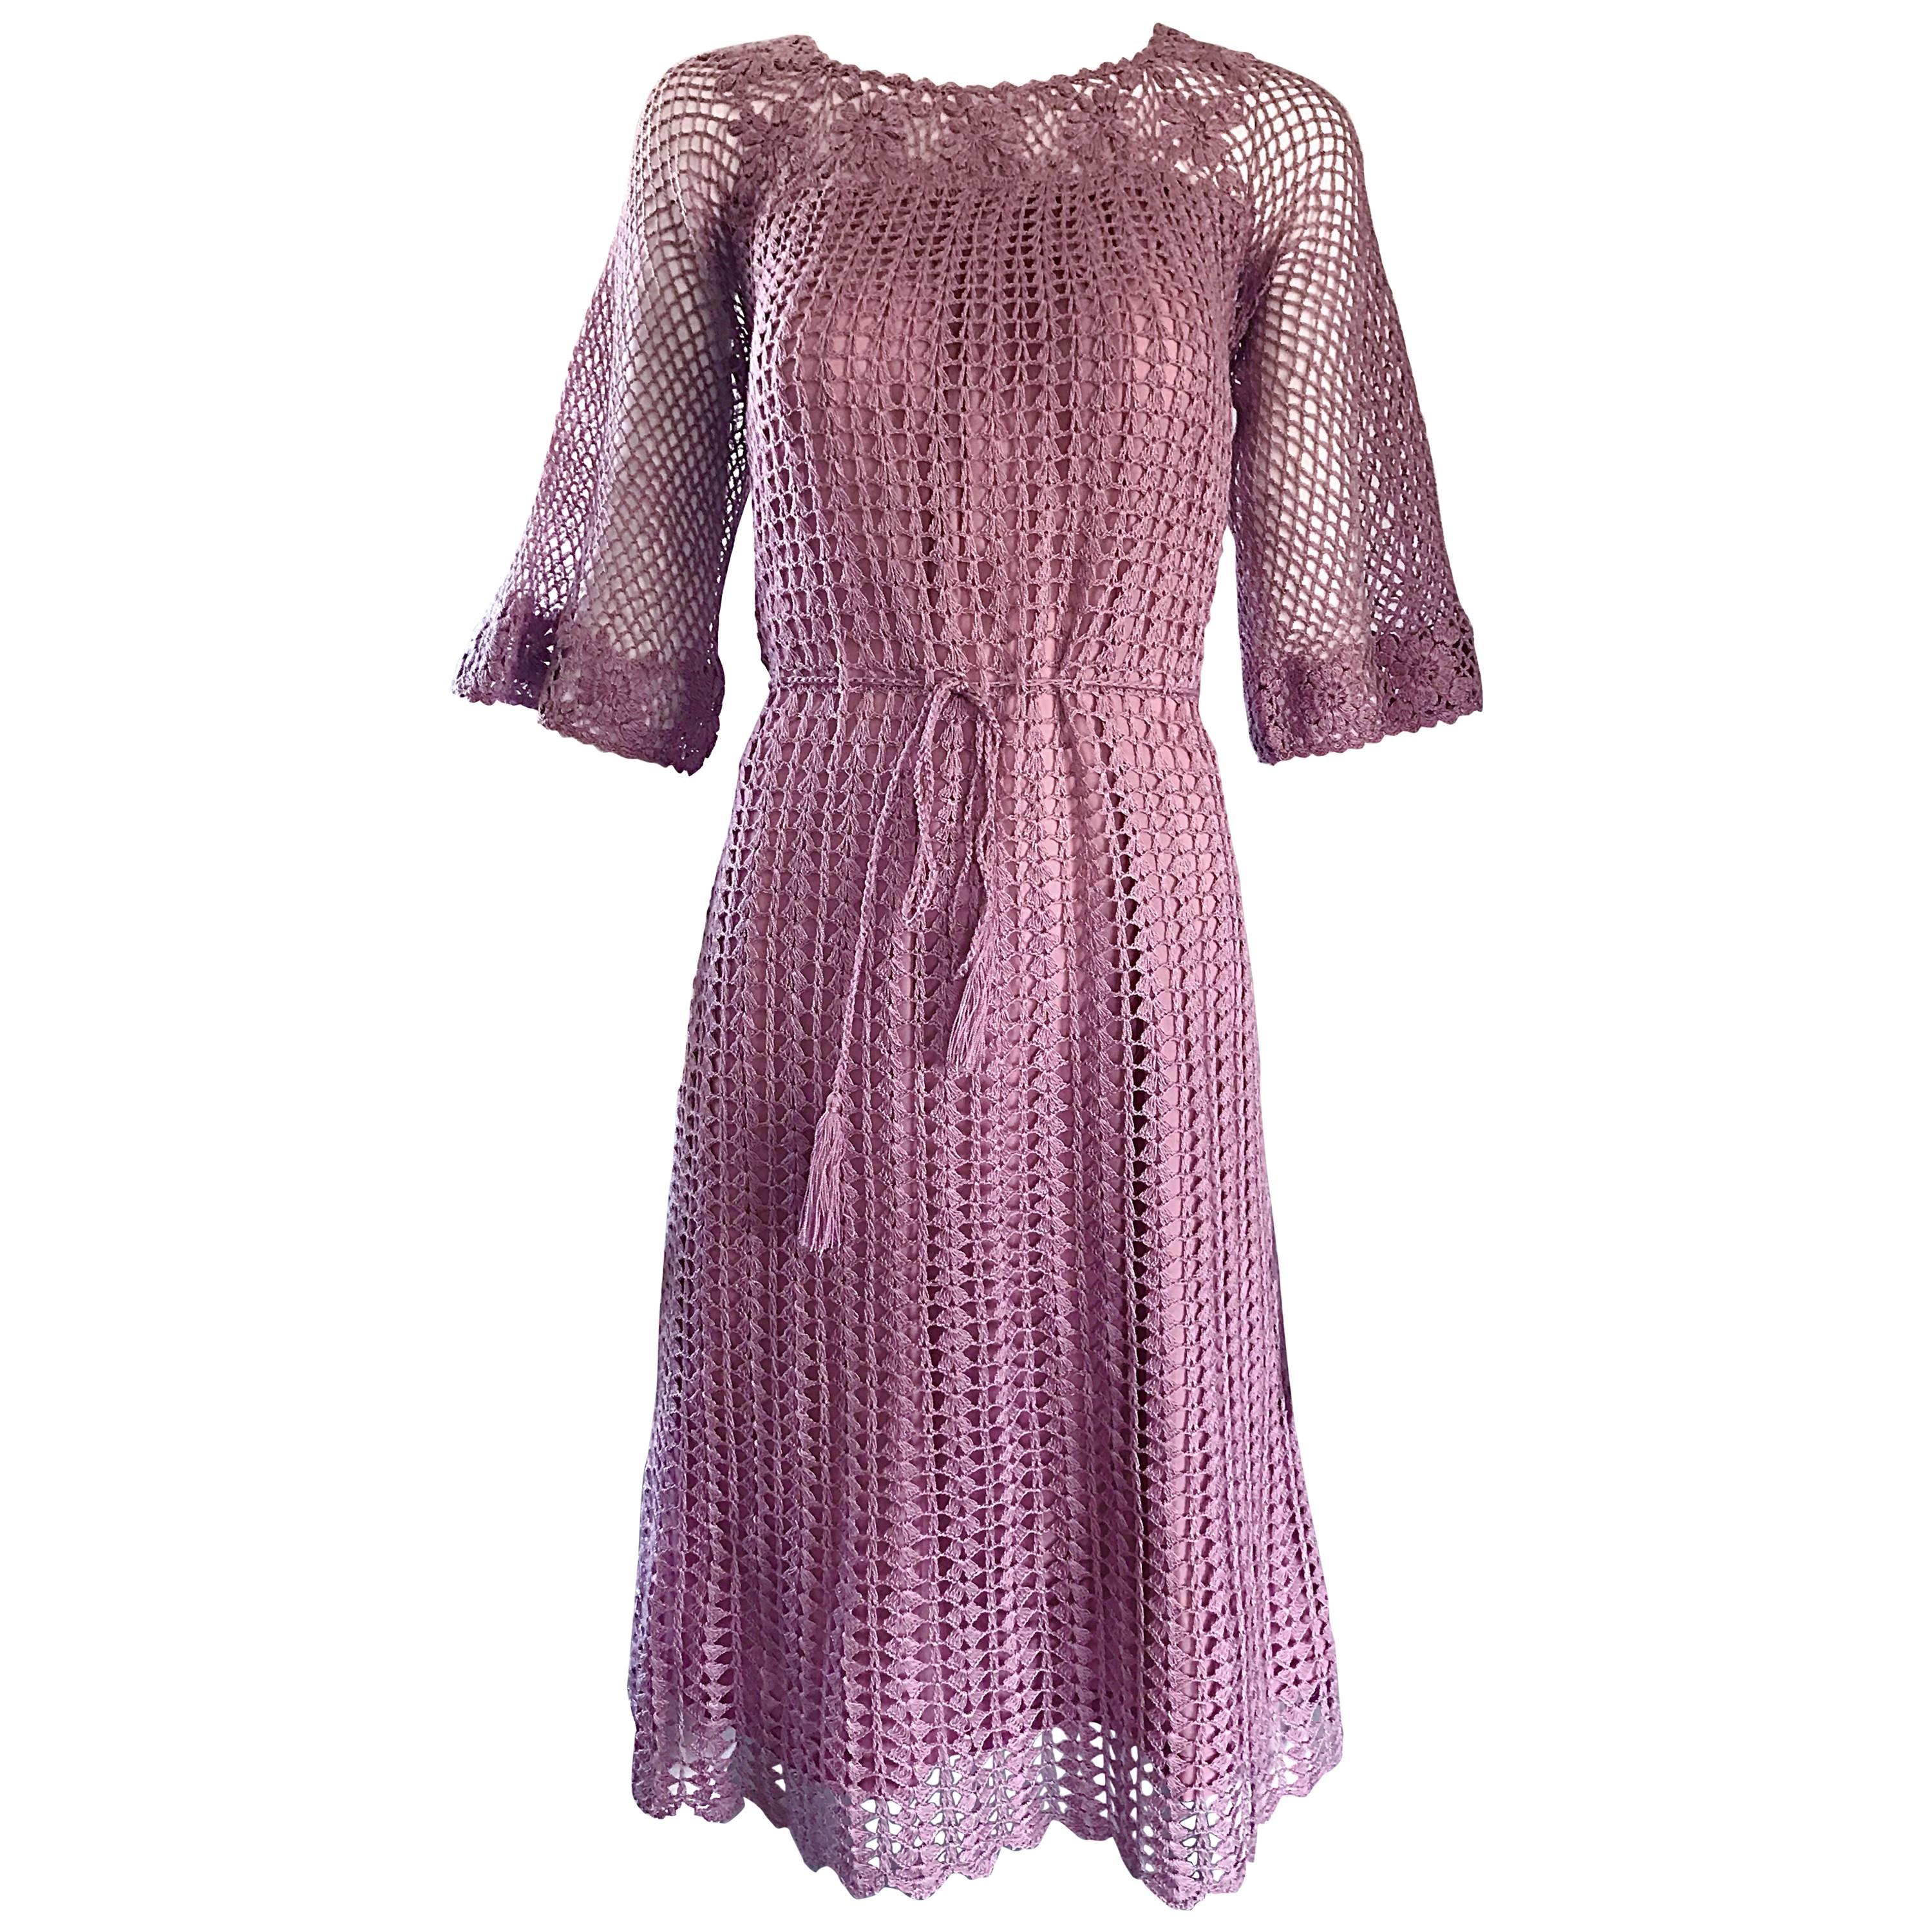 Beautiful 1970s Hand Crochet Pink Rose Bell Sleeve Chic Boho 70s Vintage Dress 